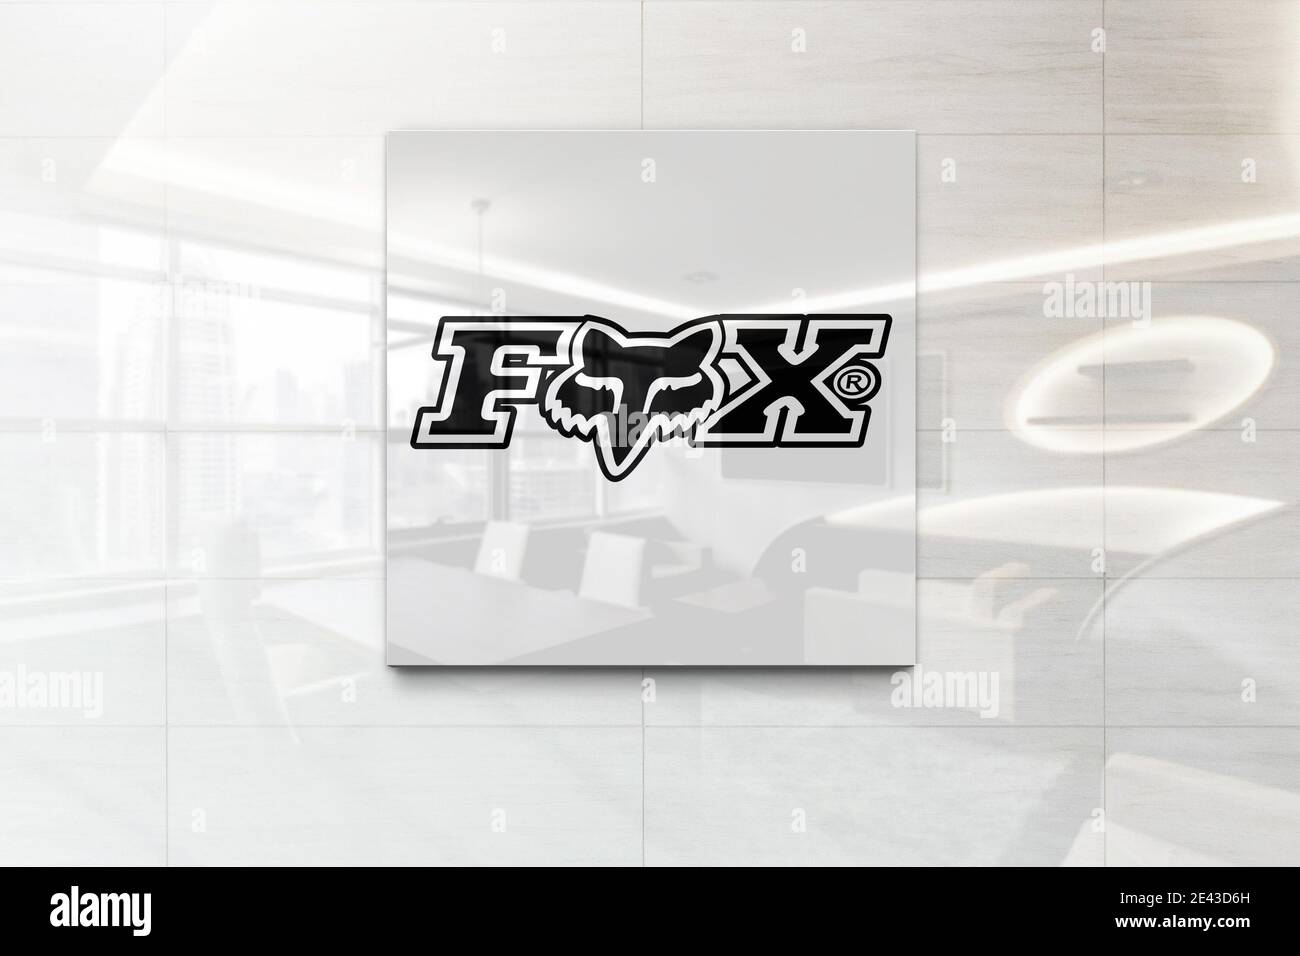 fox racing logo Stock Photo